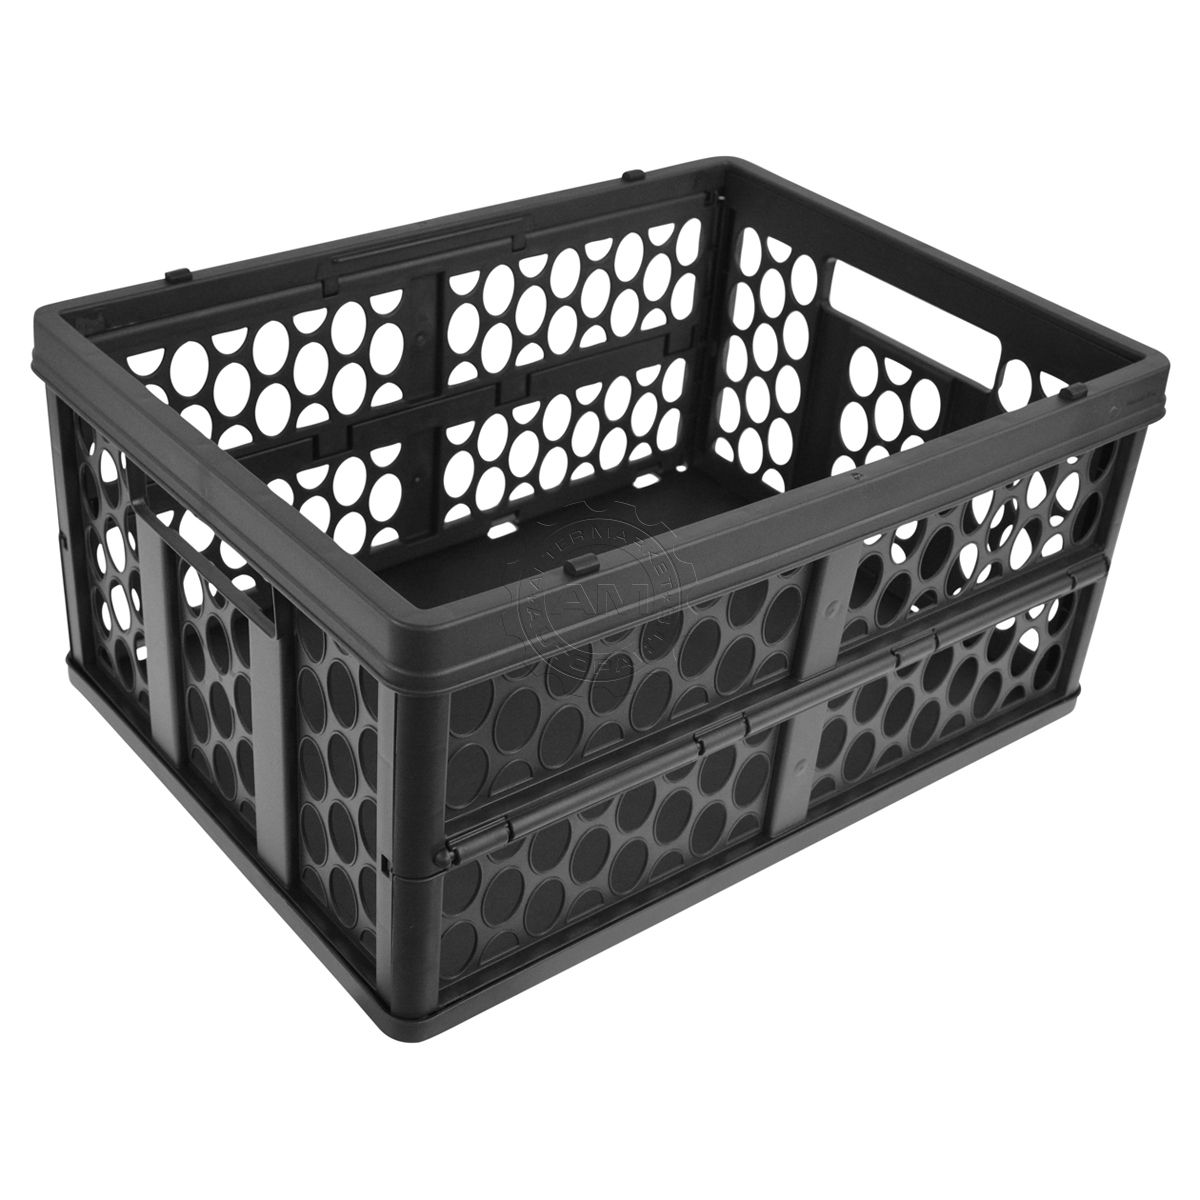 collapsible storage basket